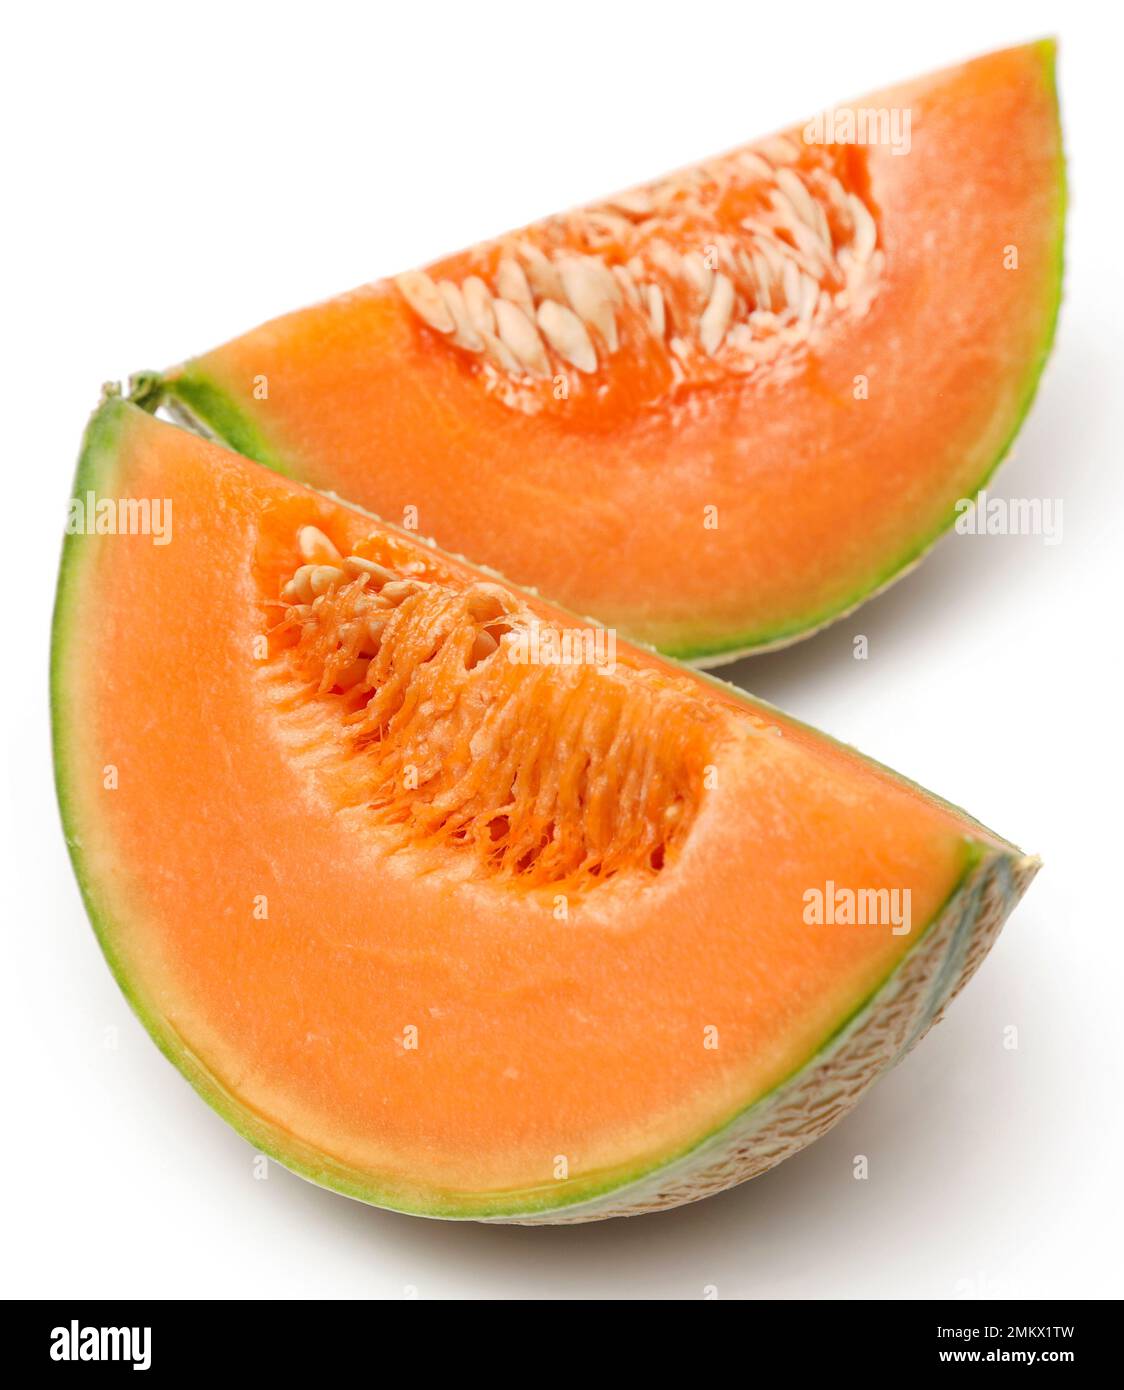 Cantaloupe or rockmelon over white background Stock Photo